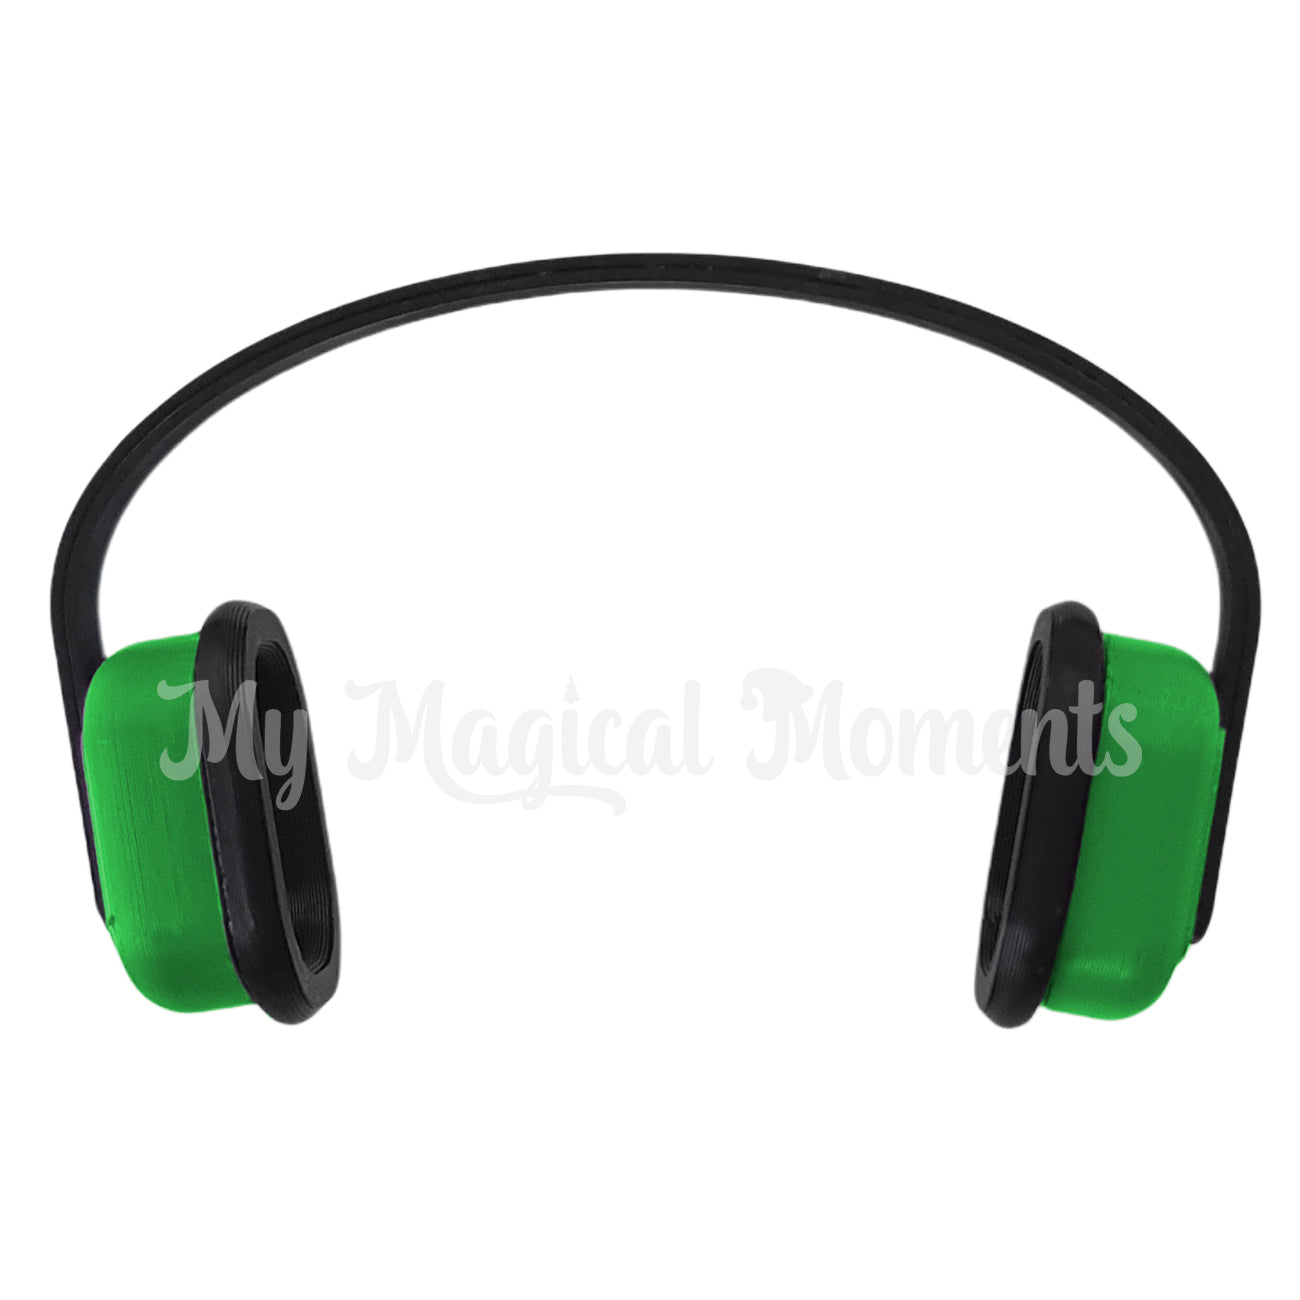 Elf sized sensory headphone green